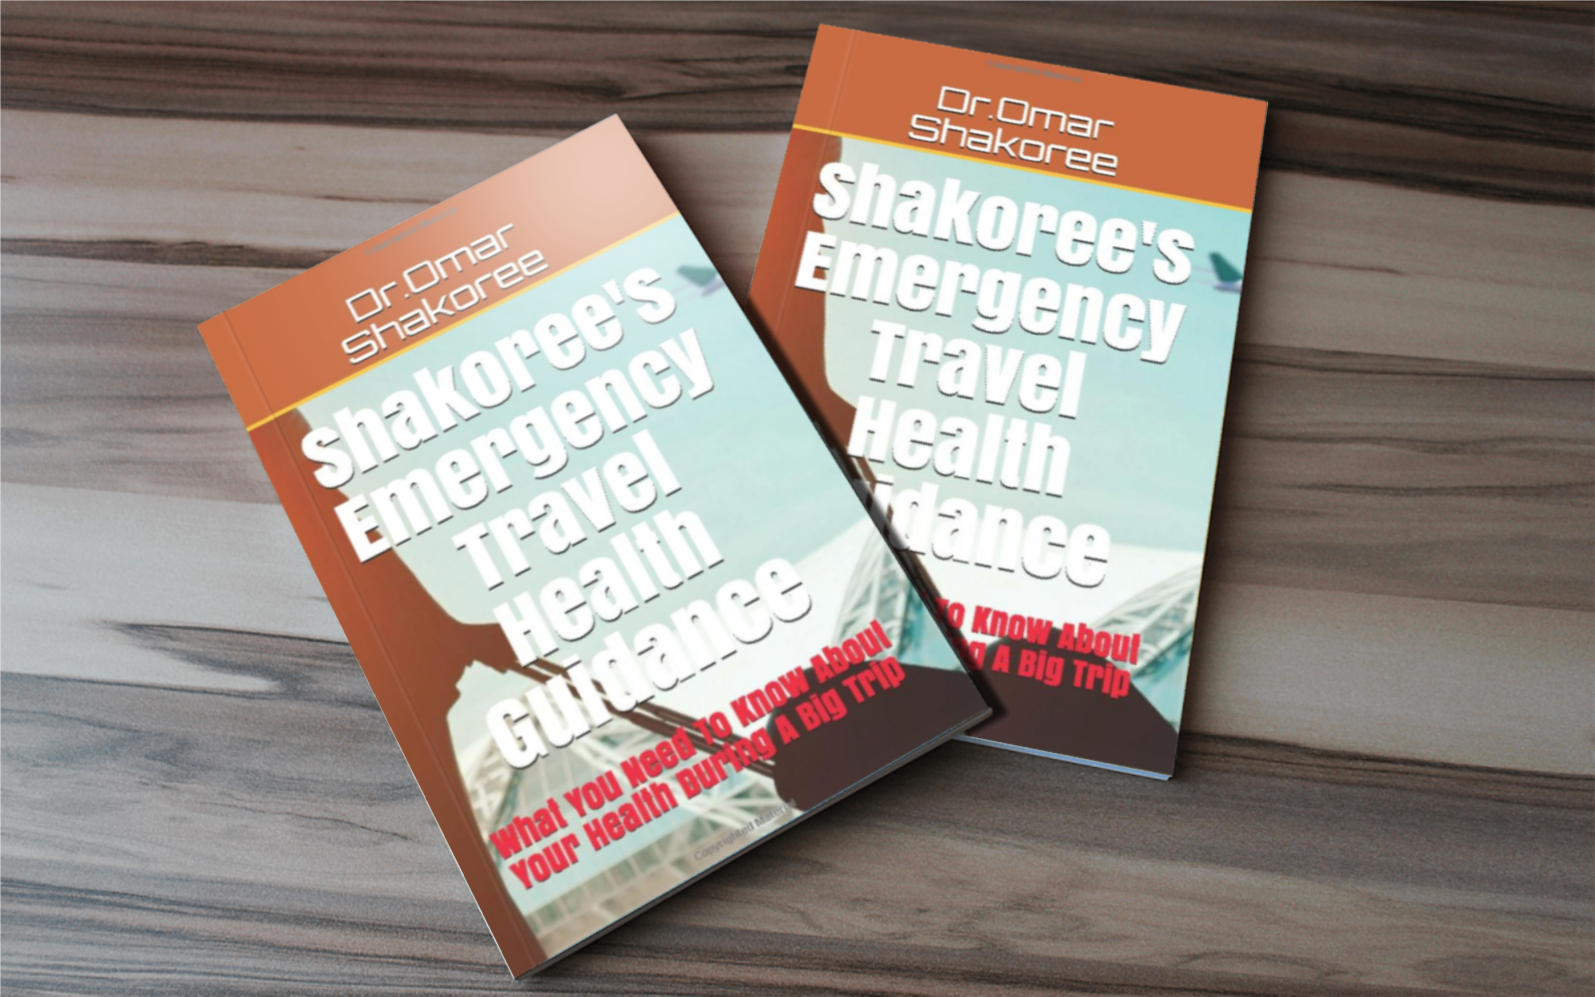 SHAKOREE EMERGENCY TRAVEL HEALTH GUIEDANCE